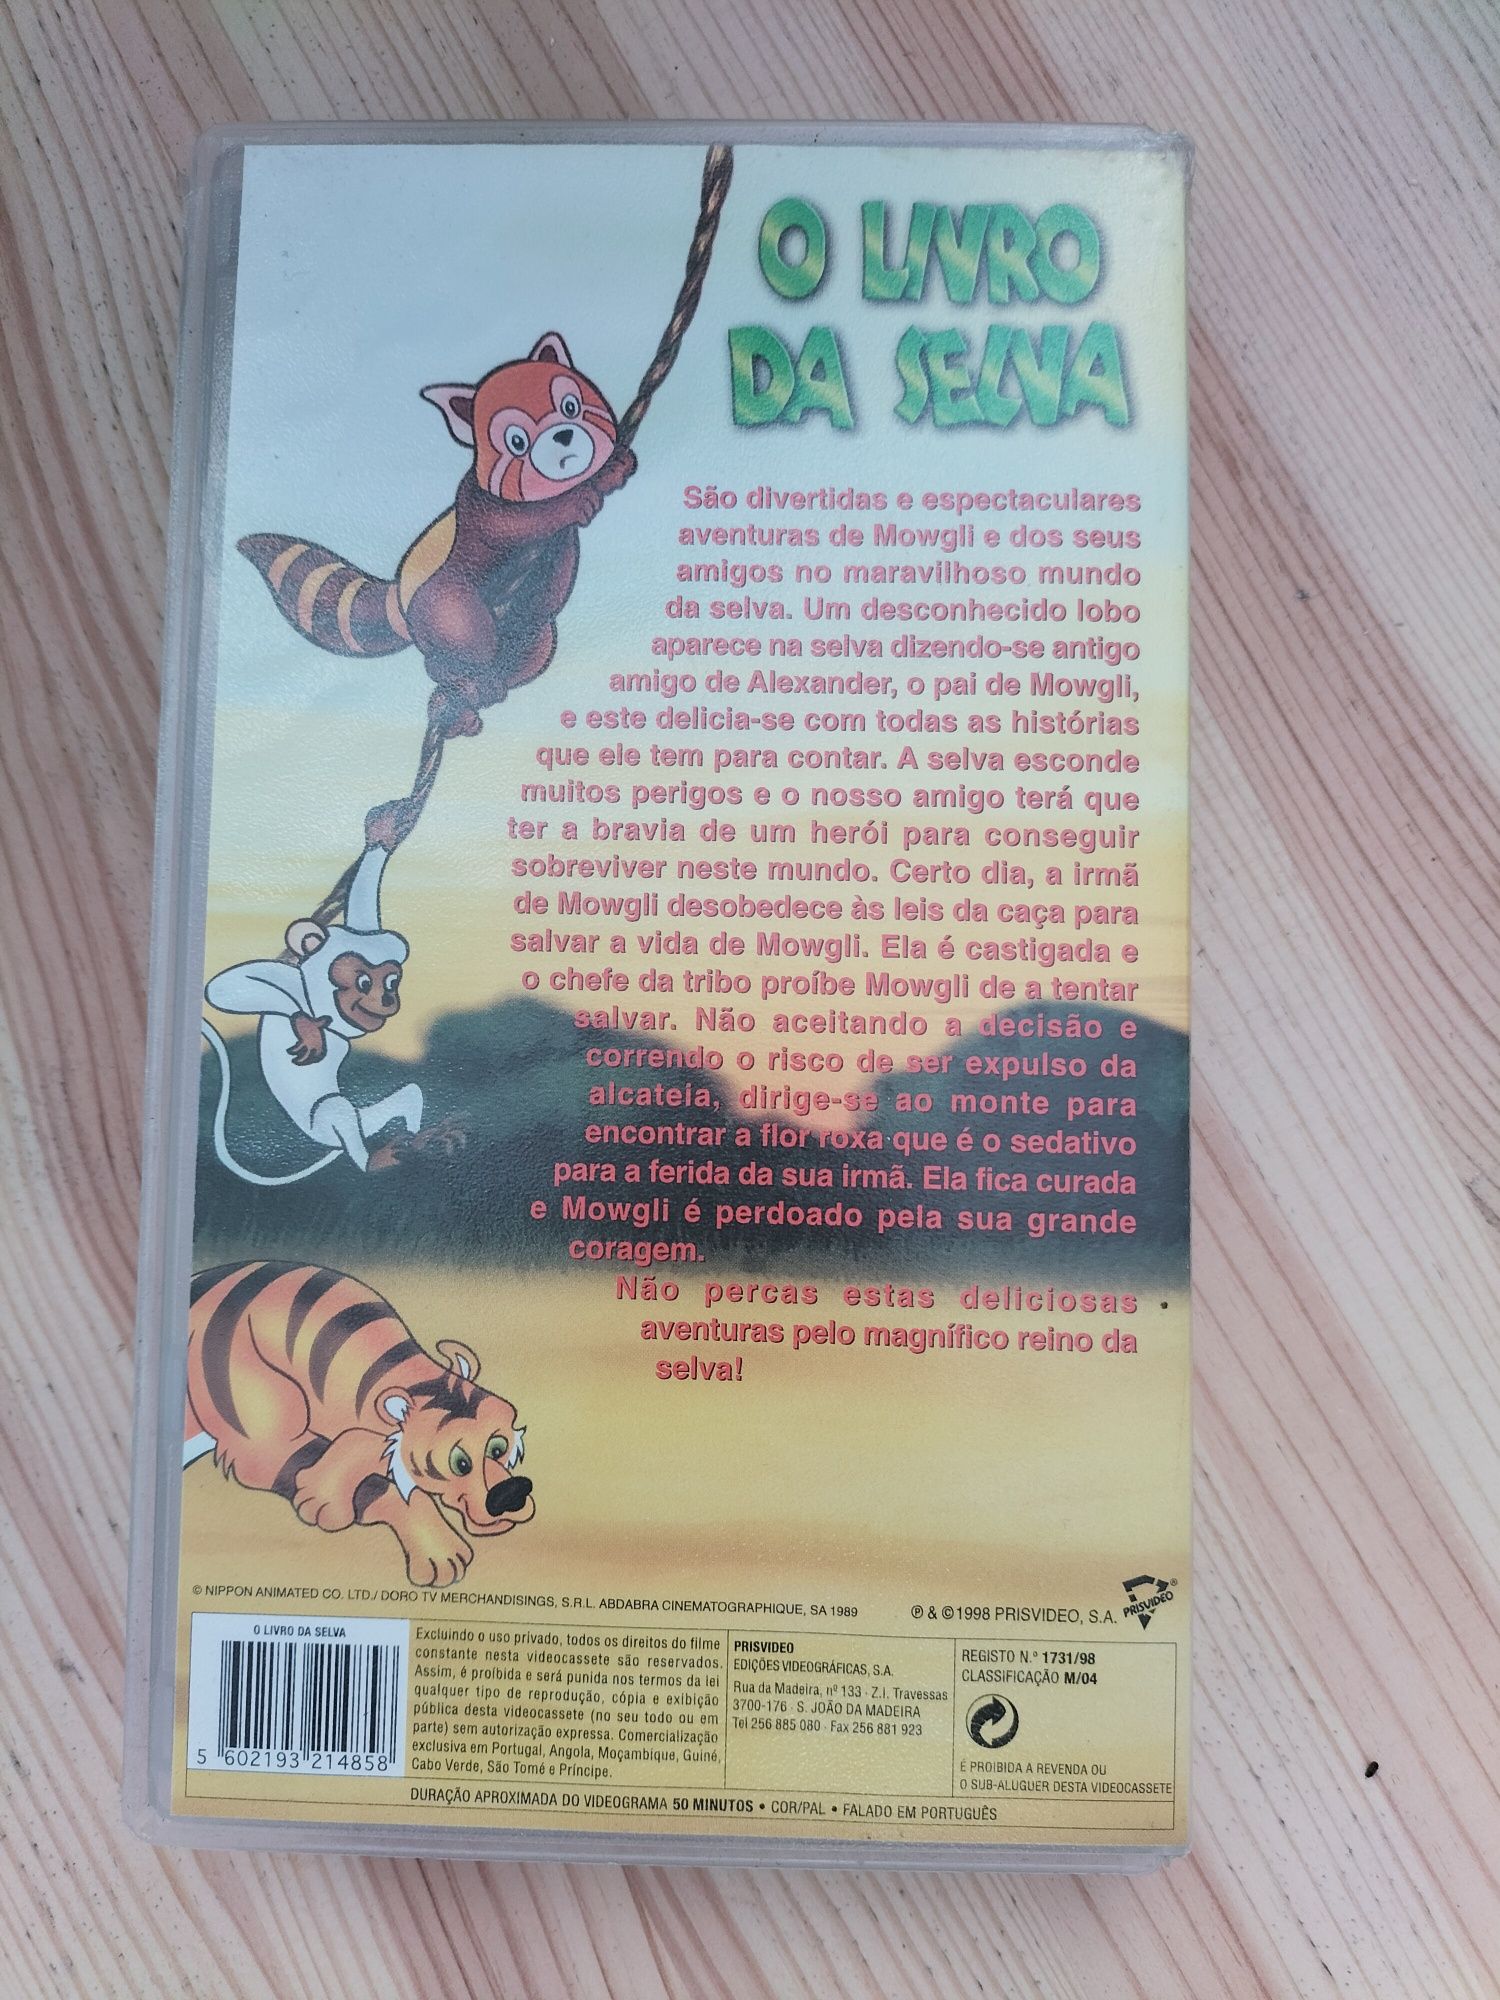 VHS - O livro da selva